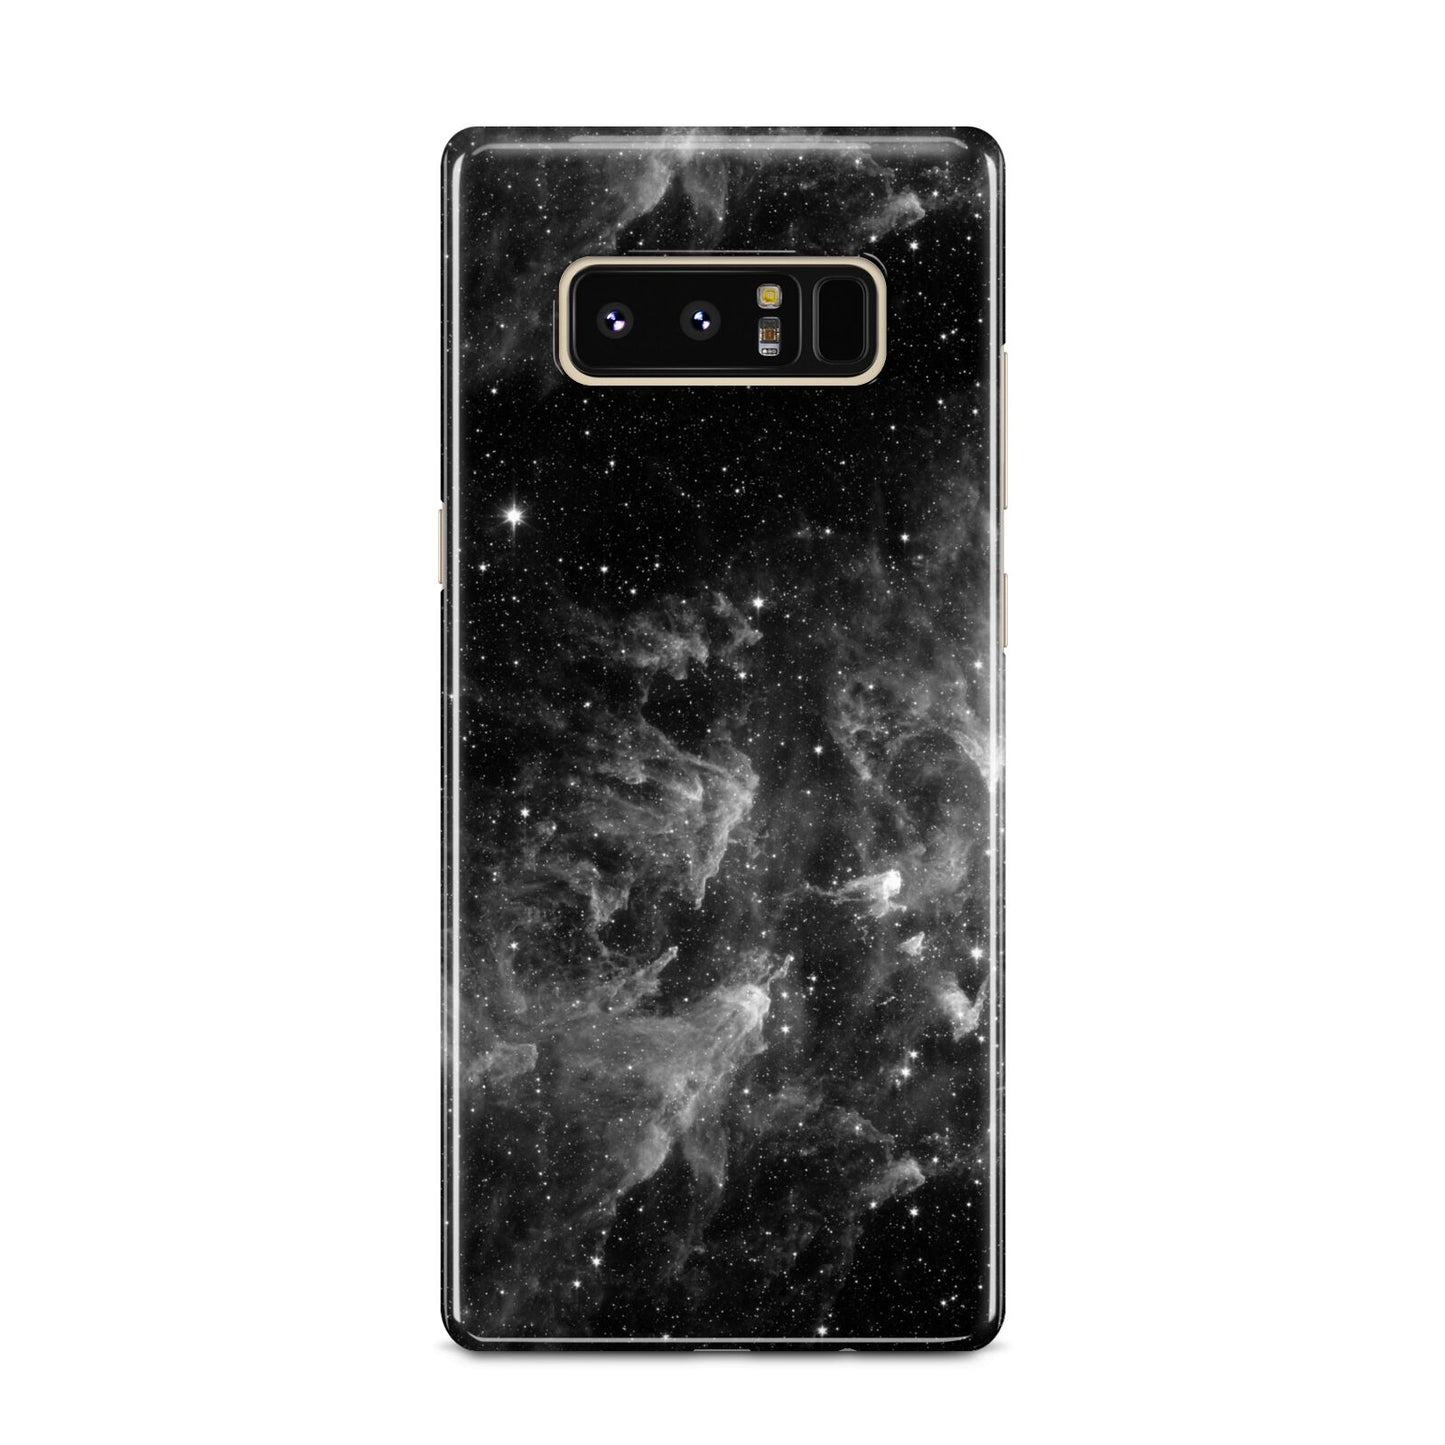 Black Space Samsung Galaxy Note 8 Case